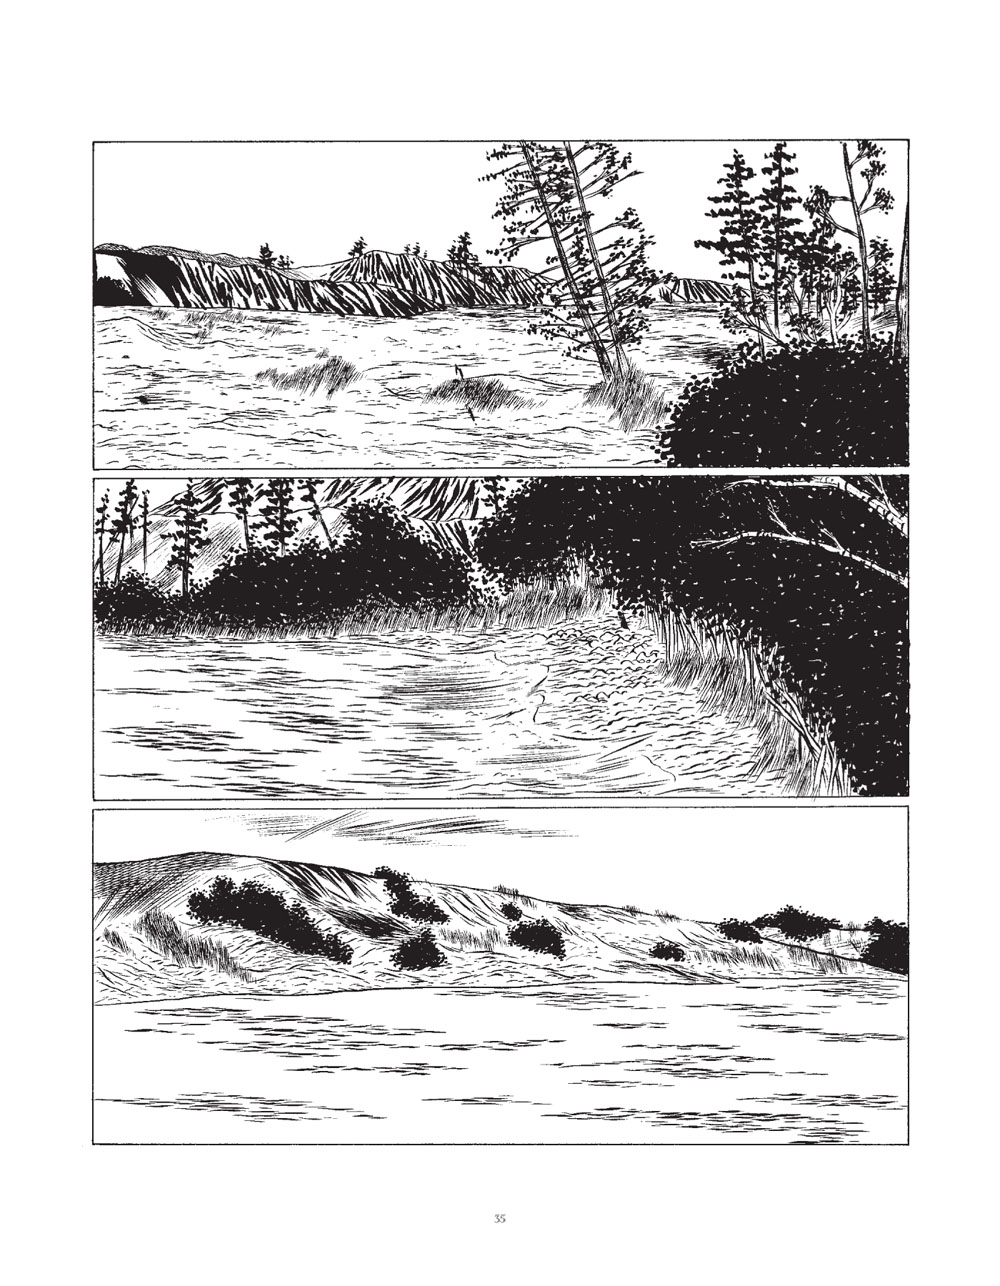 The Klondike Page 035